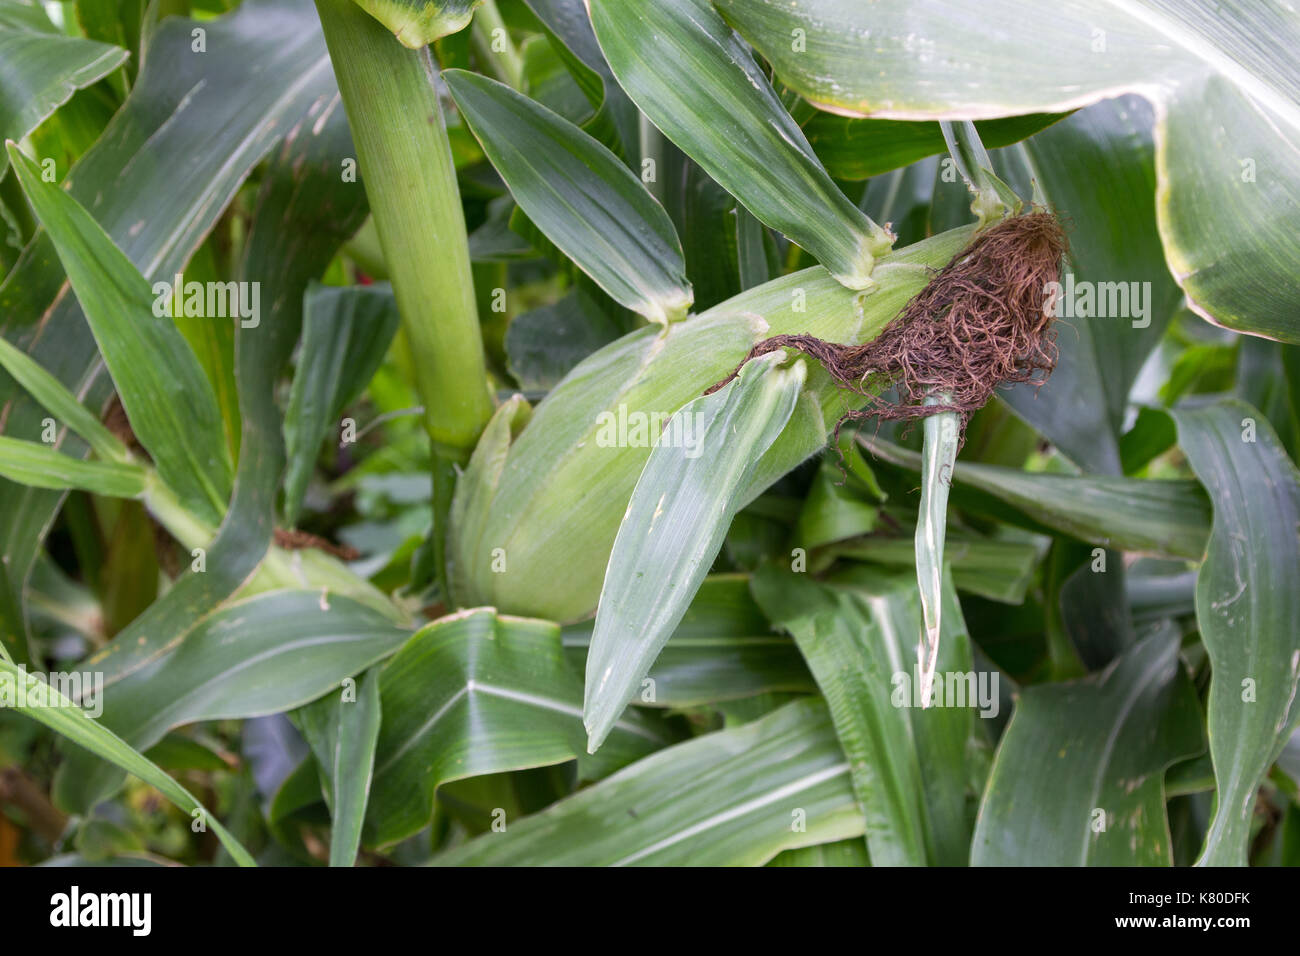 Sweetcorn Plants with ripe cobs Stock Photo